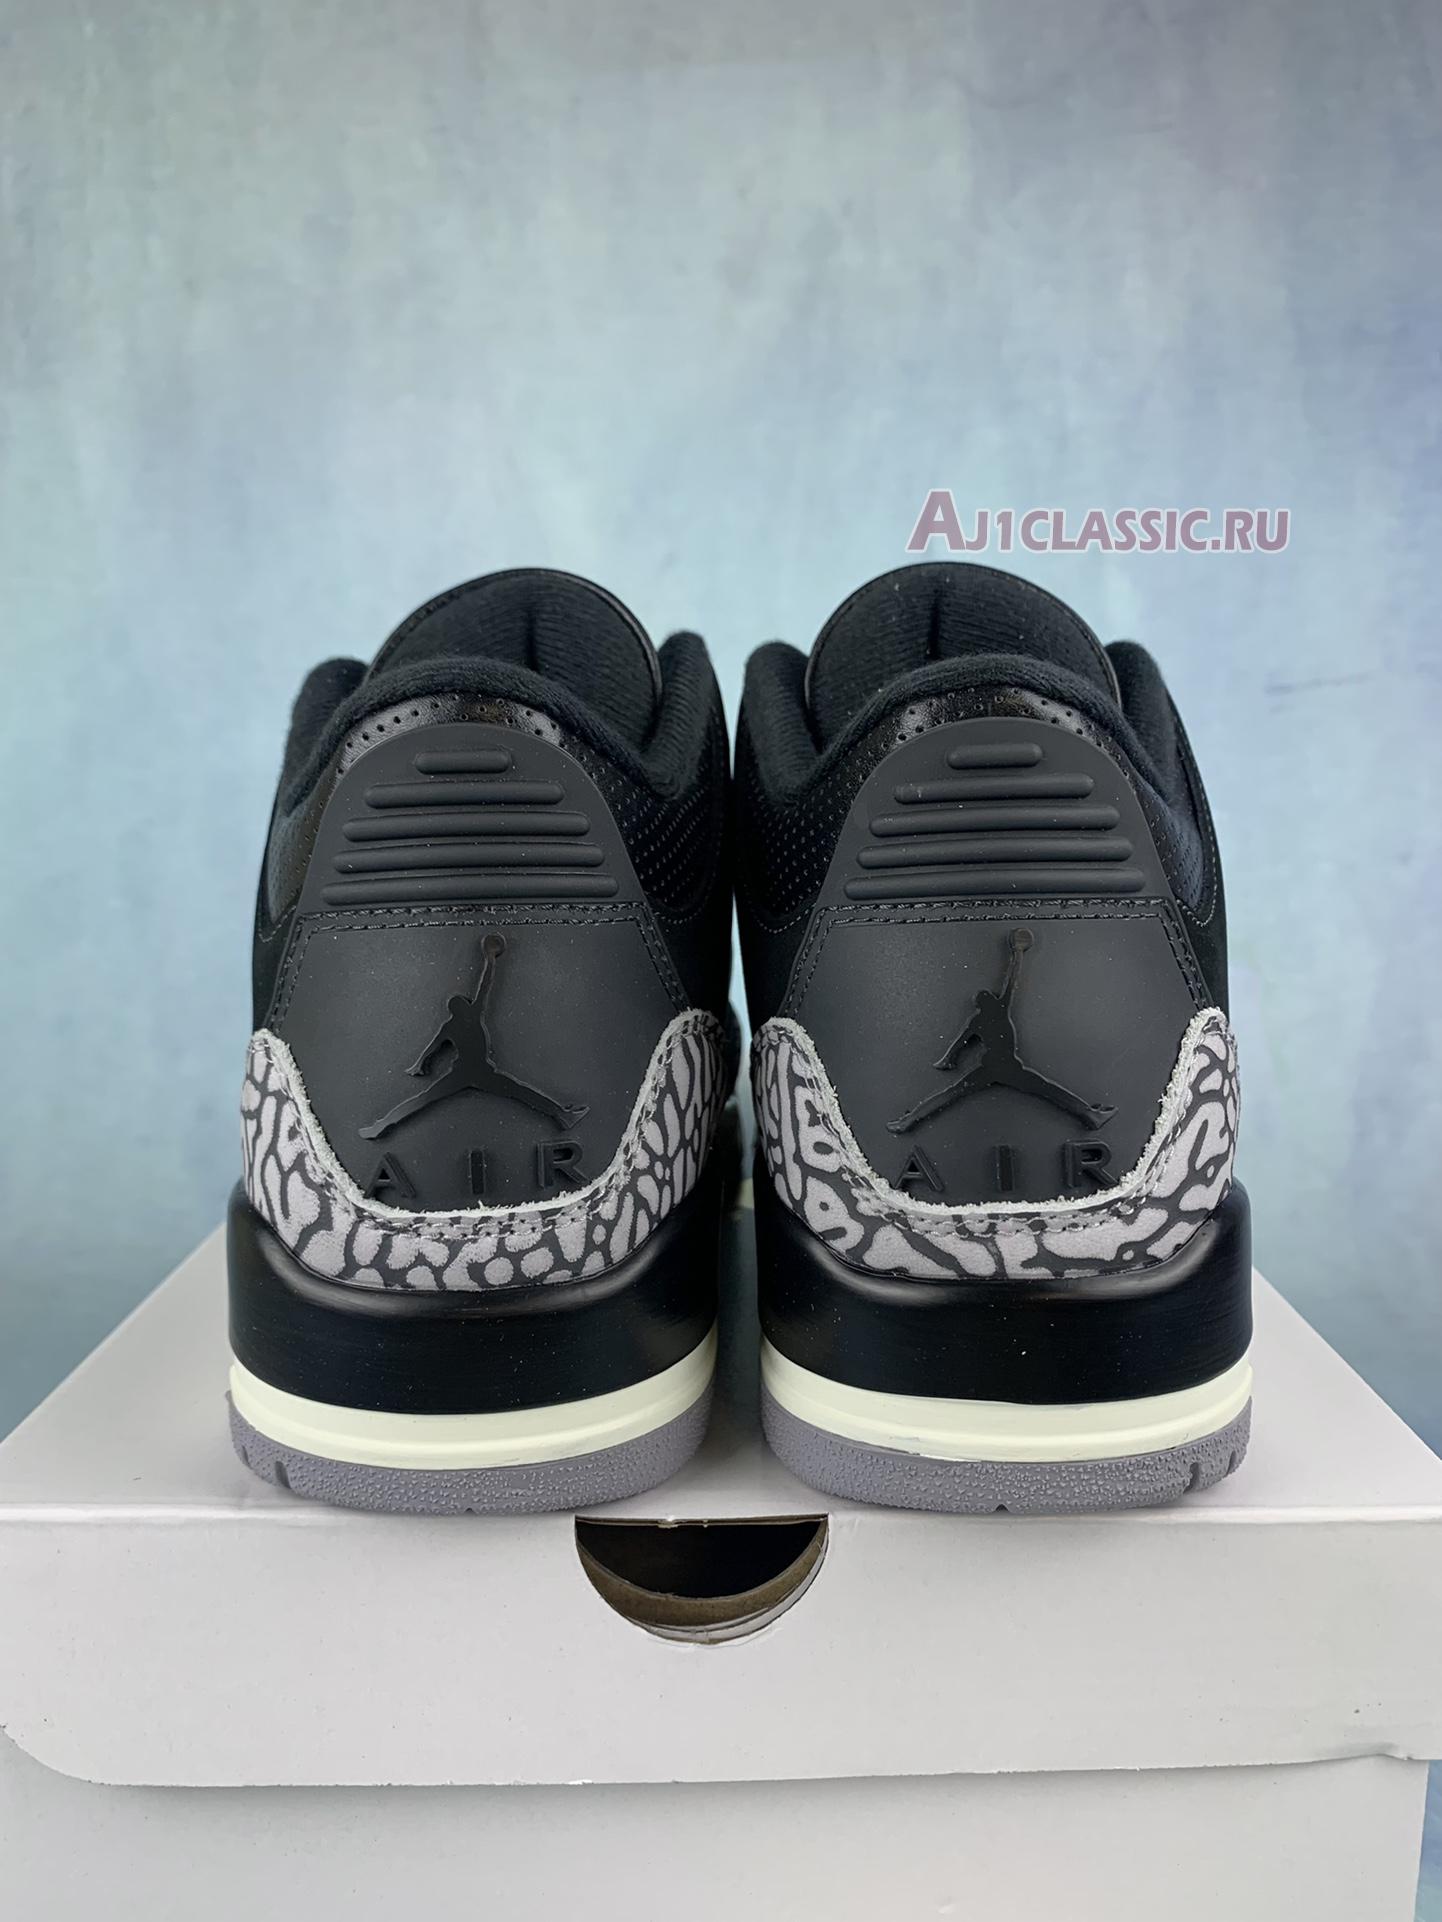 Air Jordan 3 Retro "Off Noir" CK9246-001